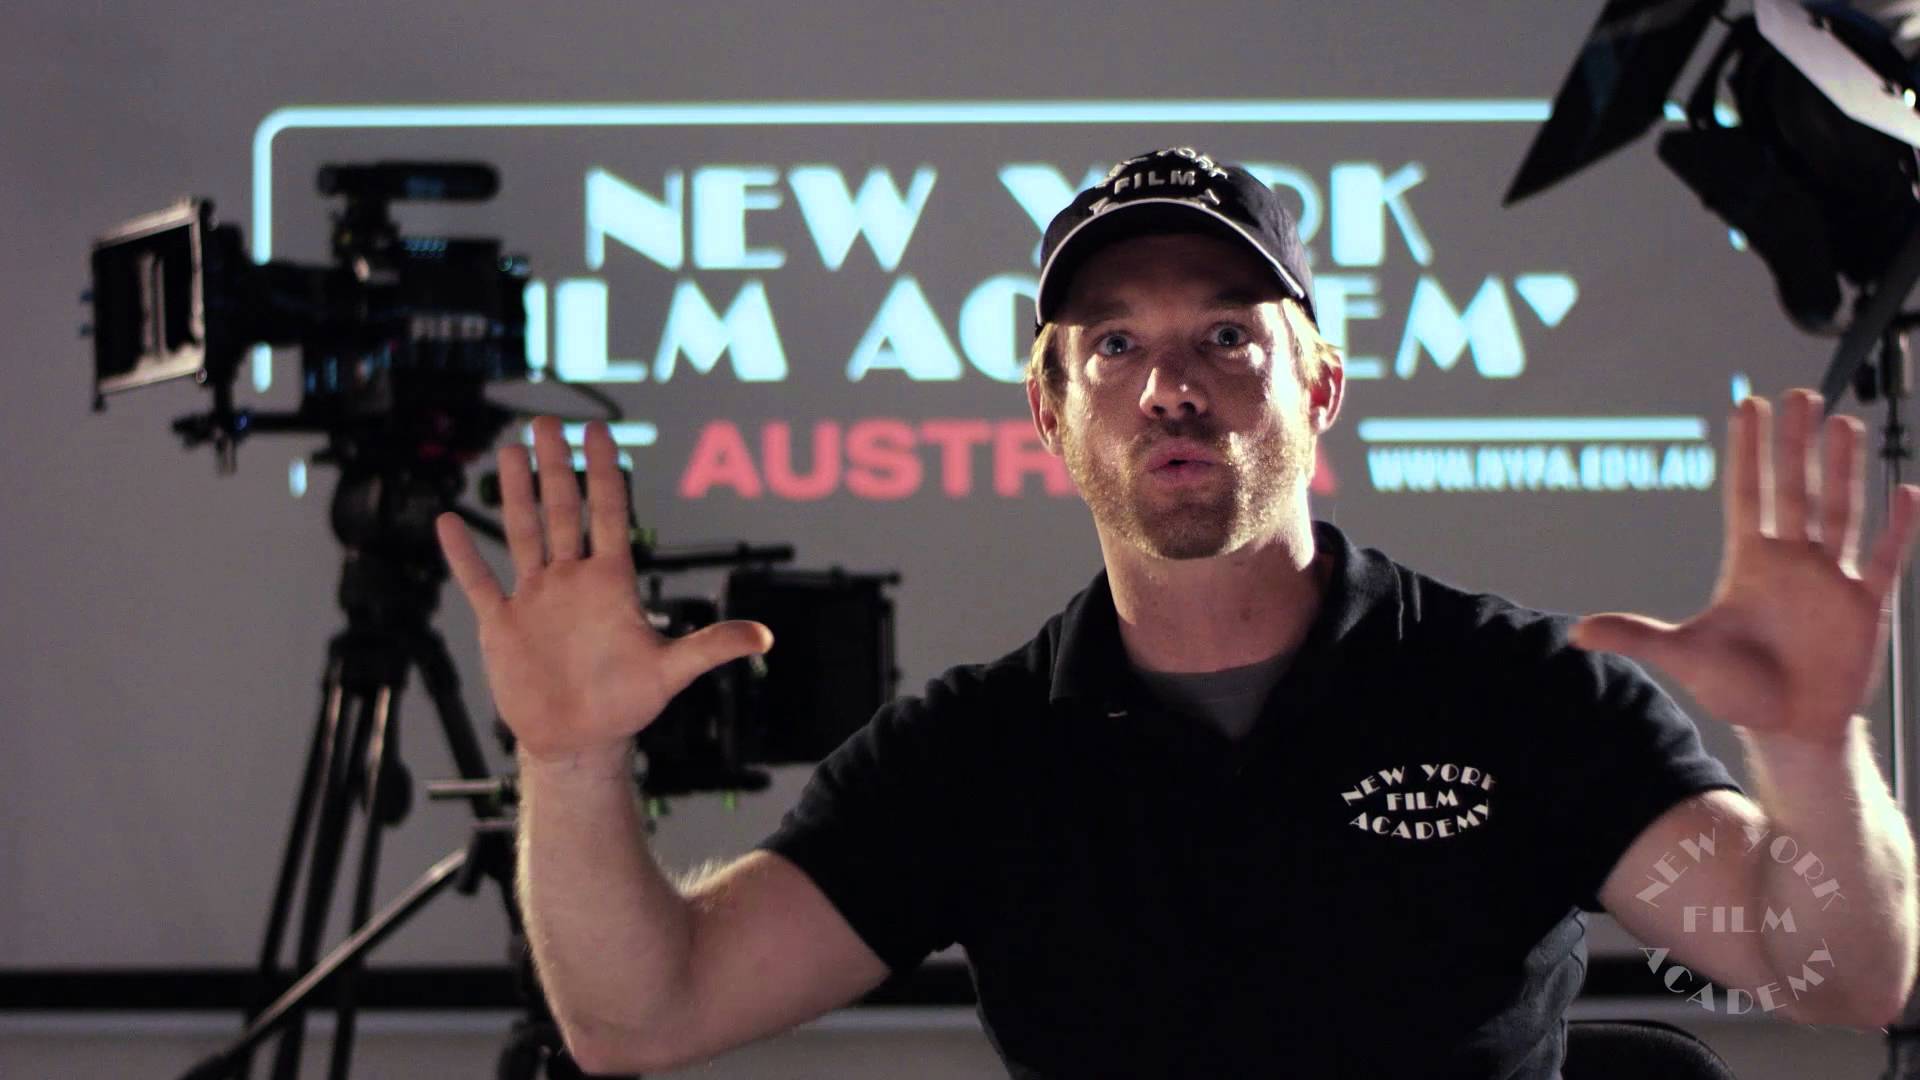 New York Film Academy Australia Teen Camp York Film